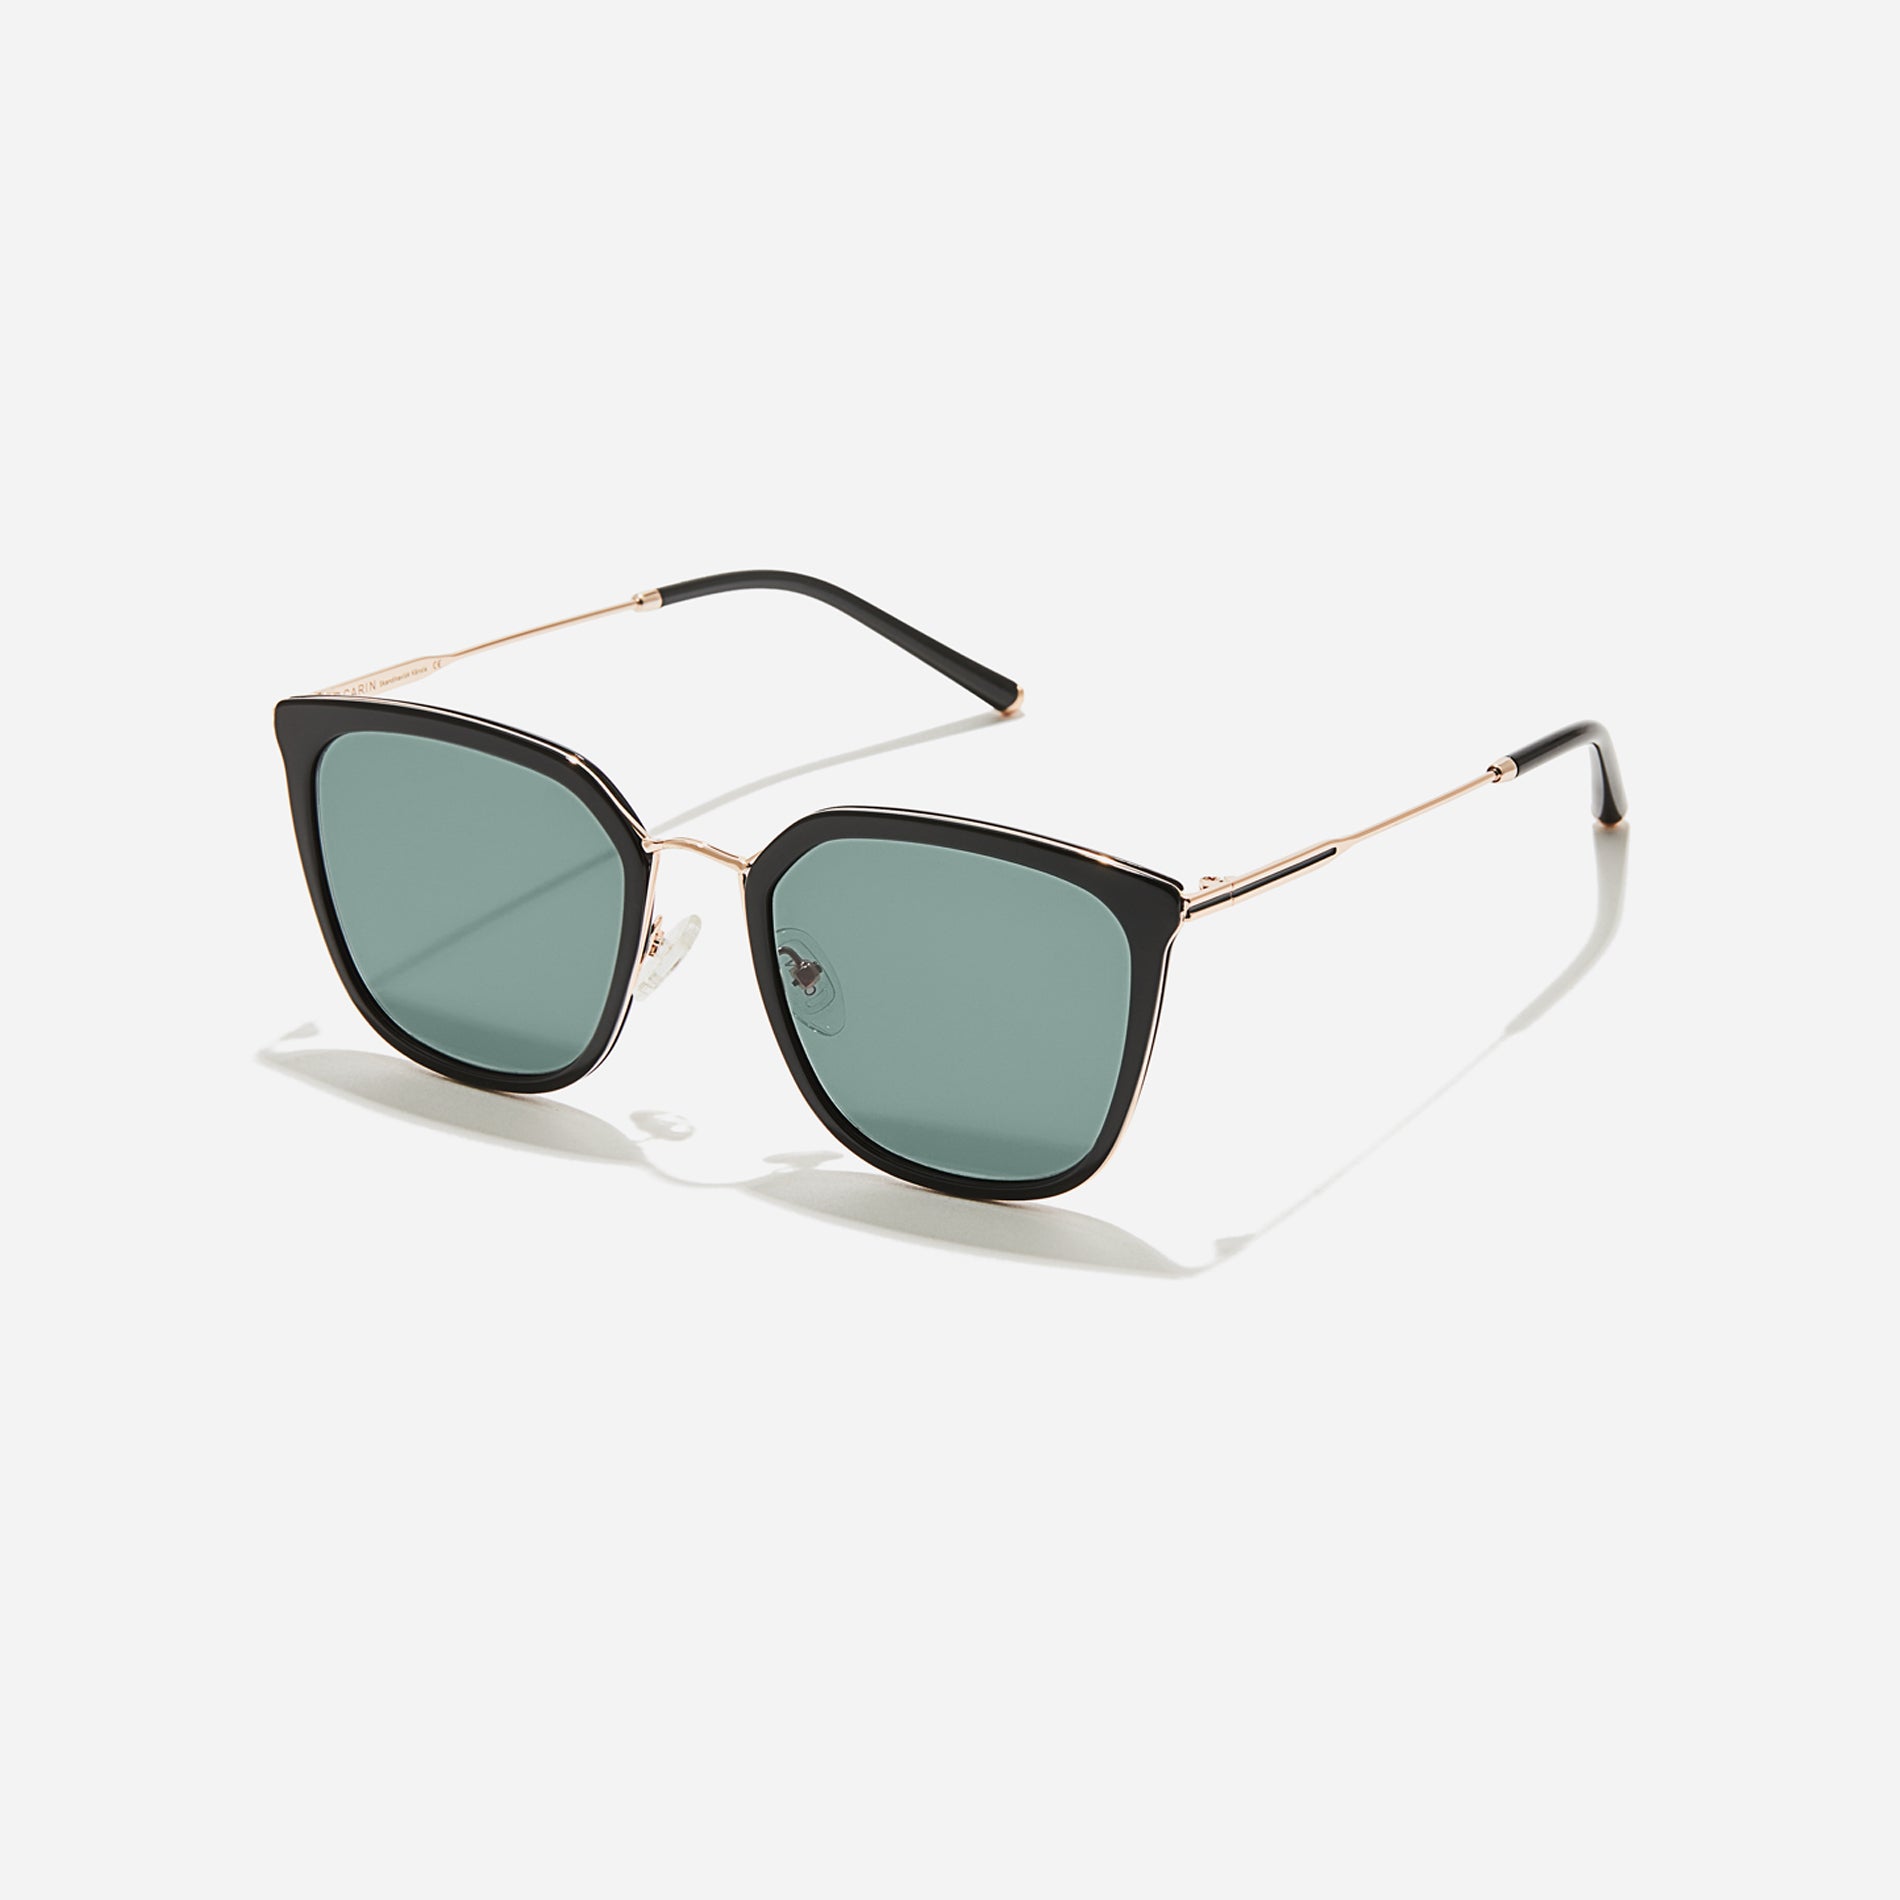  Combination sunglasses featuring flat lenses that ensure 100% UV protection, and unique nose bridge details.